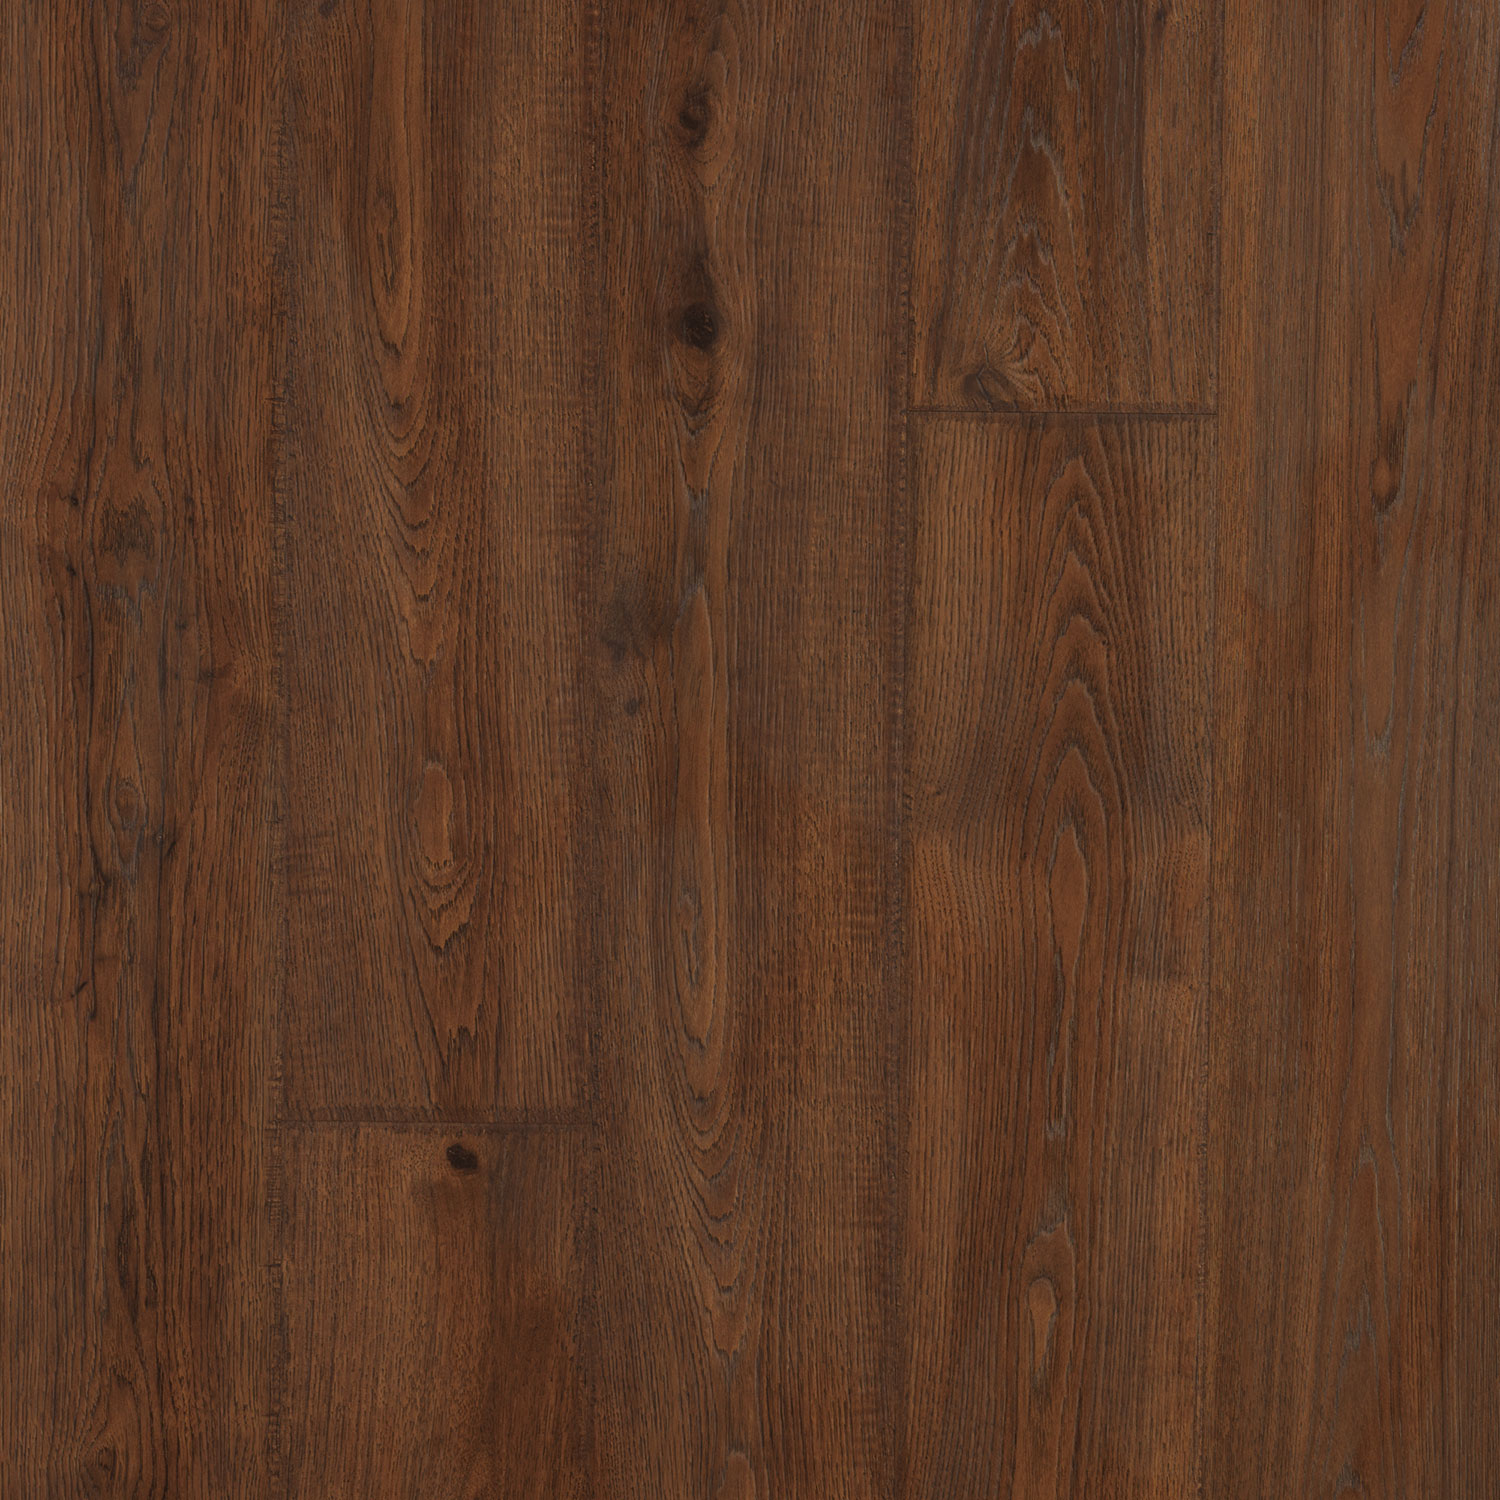 Elderwood S G Carpet And More, Copper Sands Oak Laminate Flooring